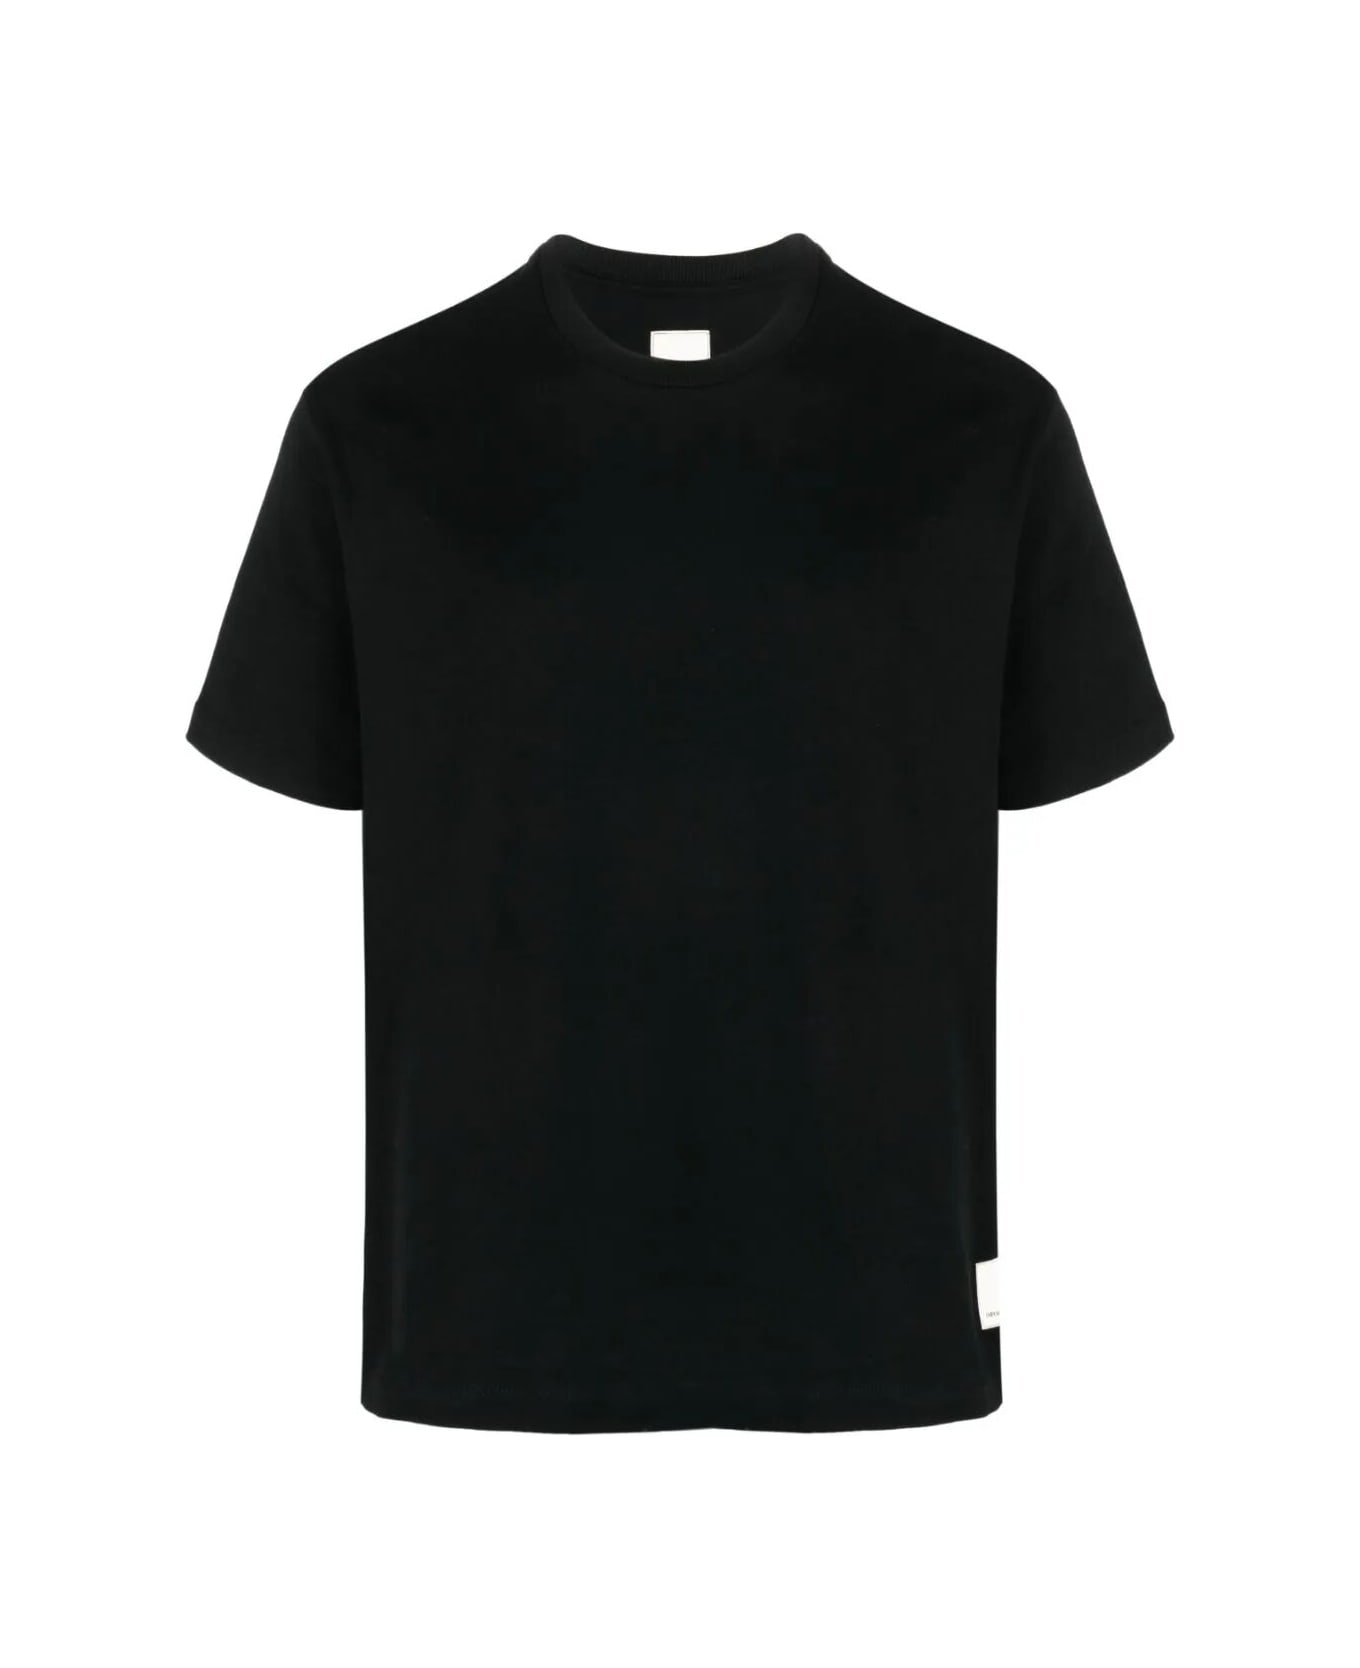 Emporio Armani T-shirt - Black Label